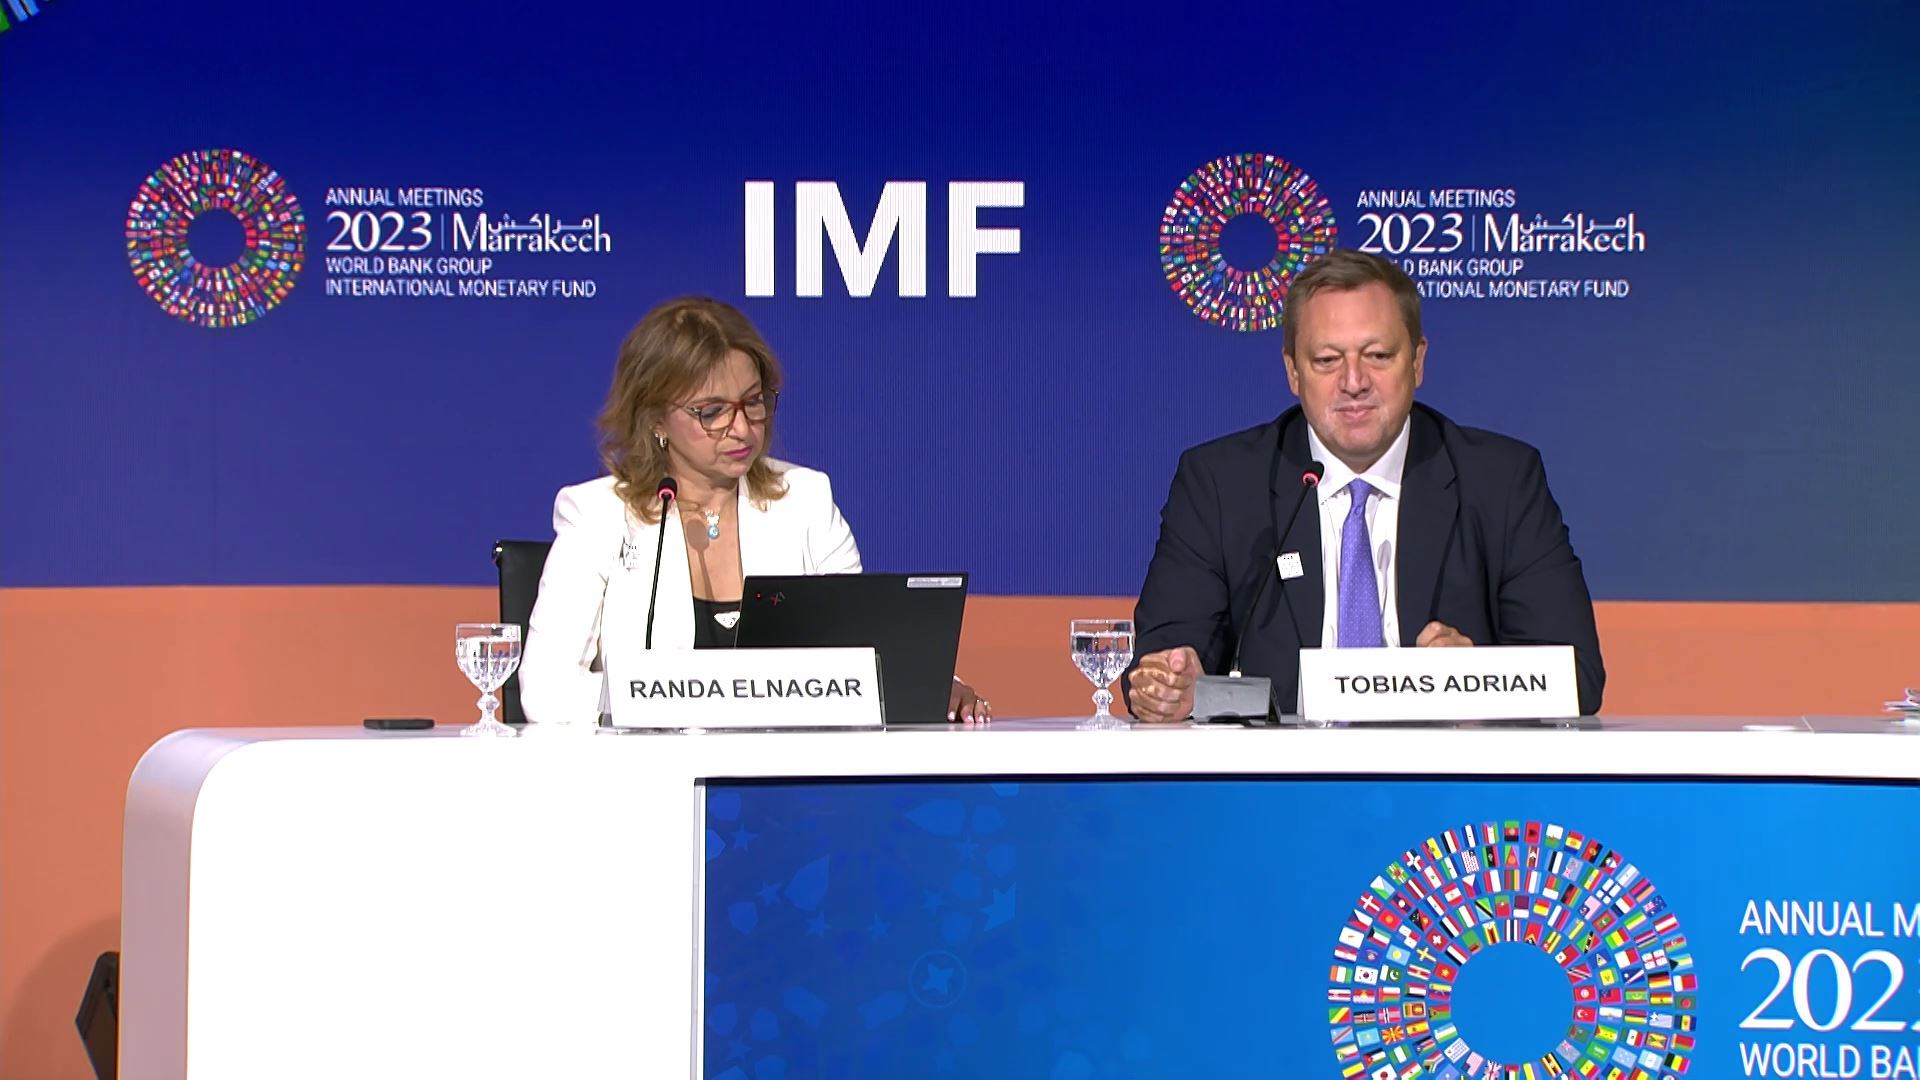 IMF Global Financial Stability Report Presser